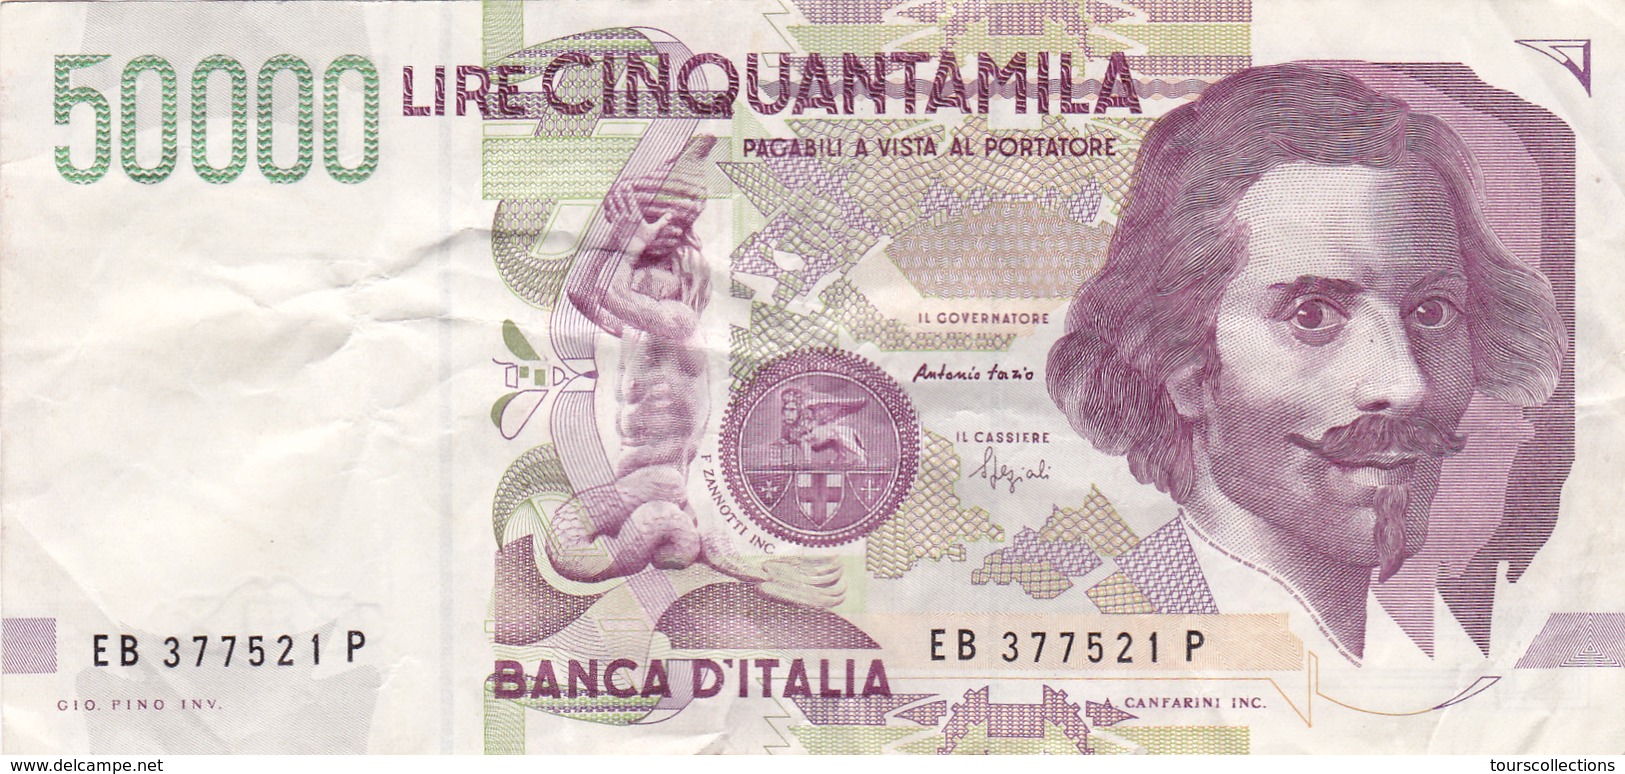 Billet ITALIE 50 000 Lire TTB De 09/12/1992  Portrait De Bernini @ PICK 116 B @ - 50.000 Lire